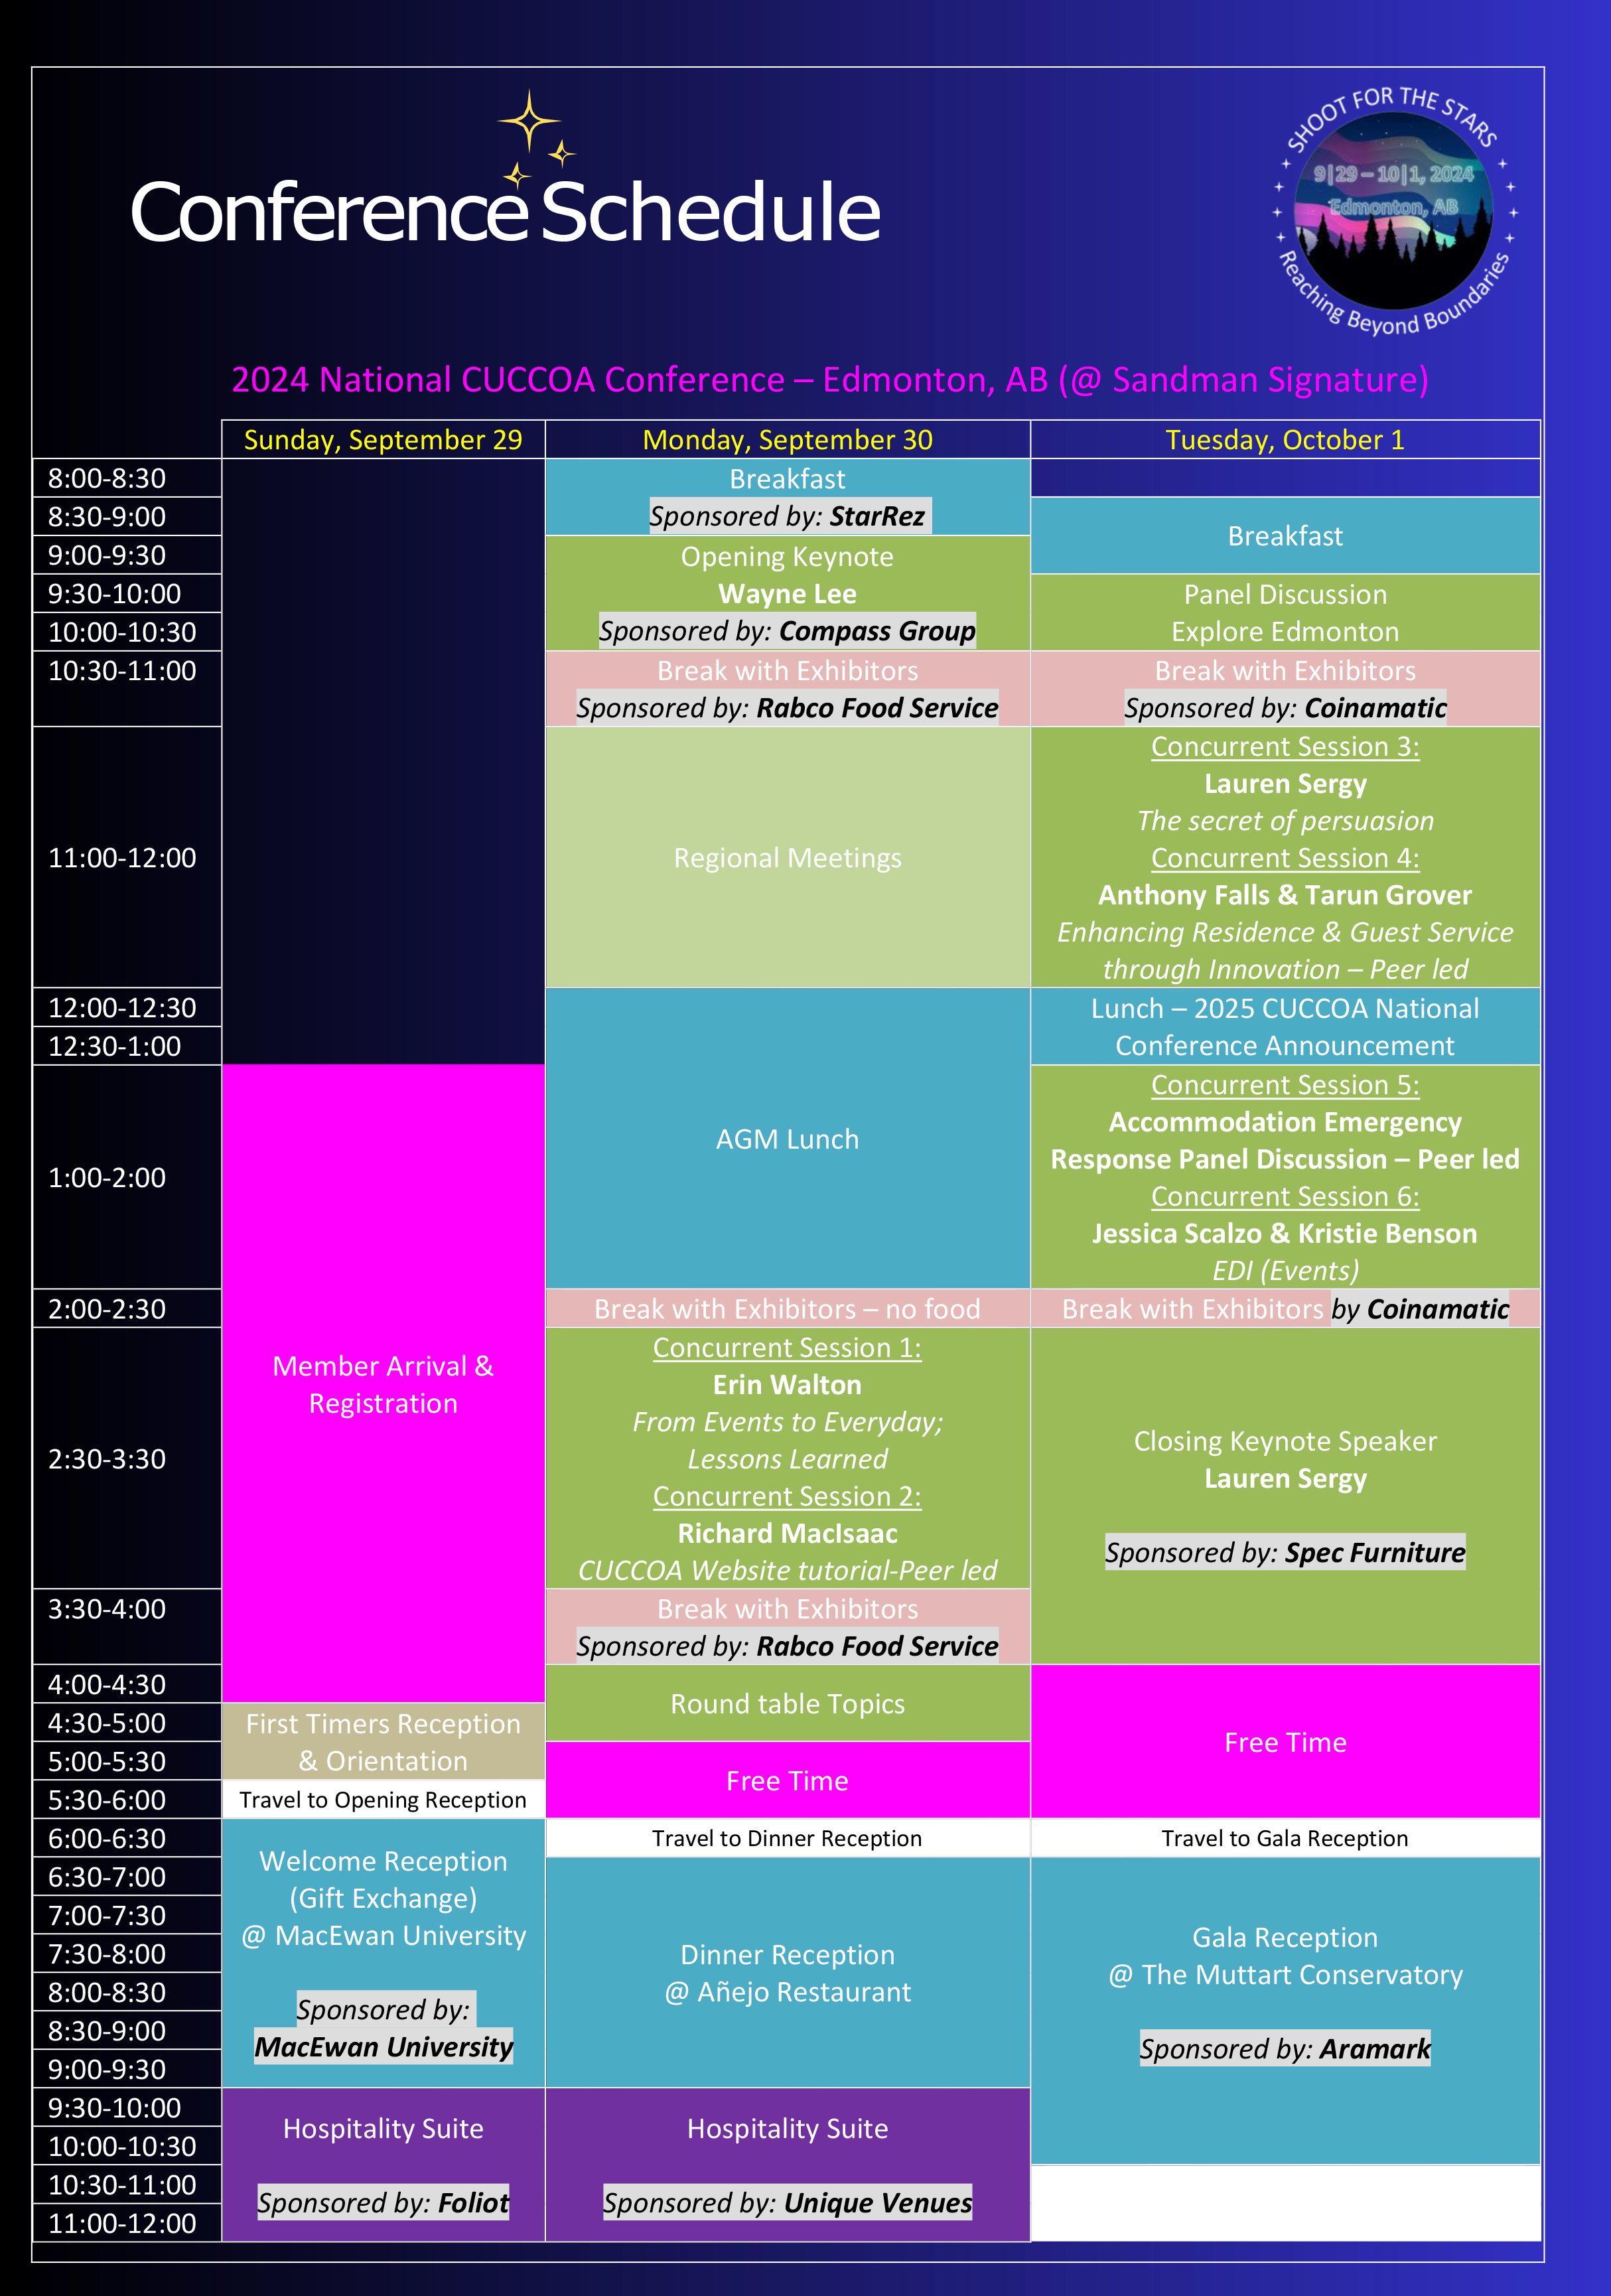 _images/2024 Conference Schedule J24.jpg